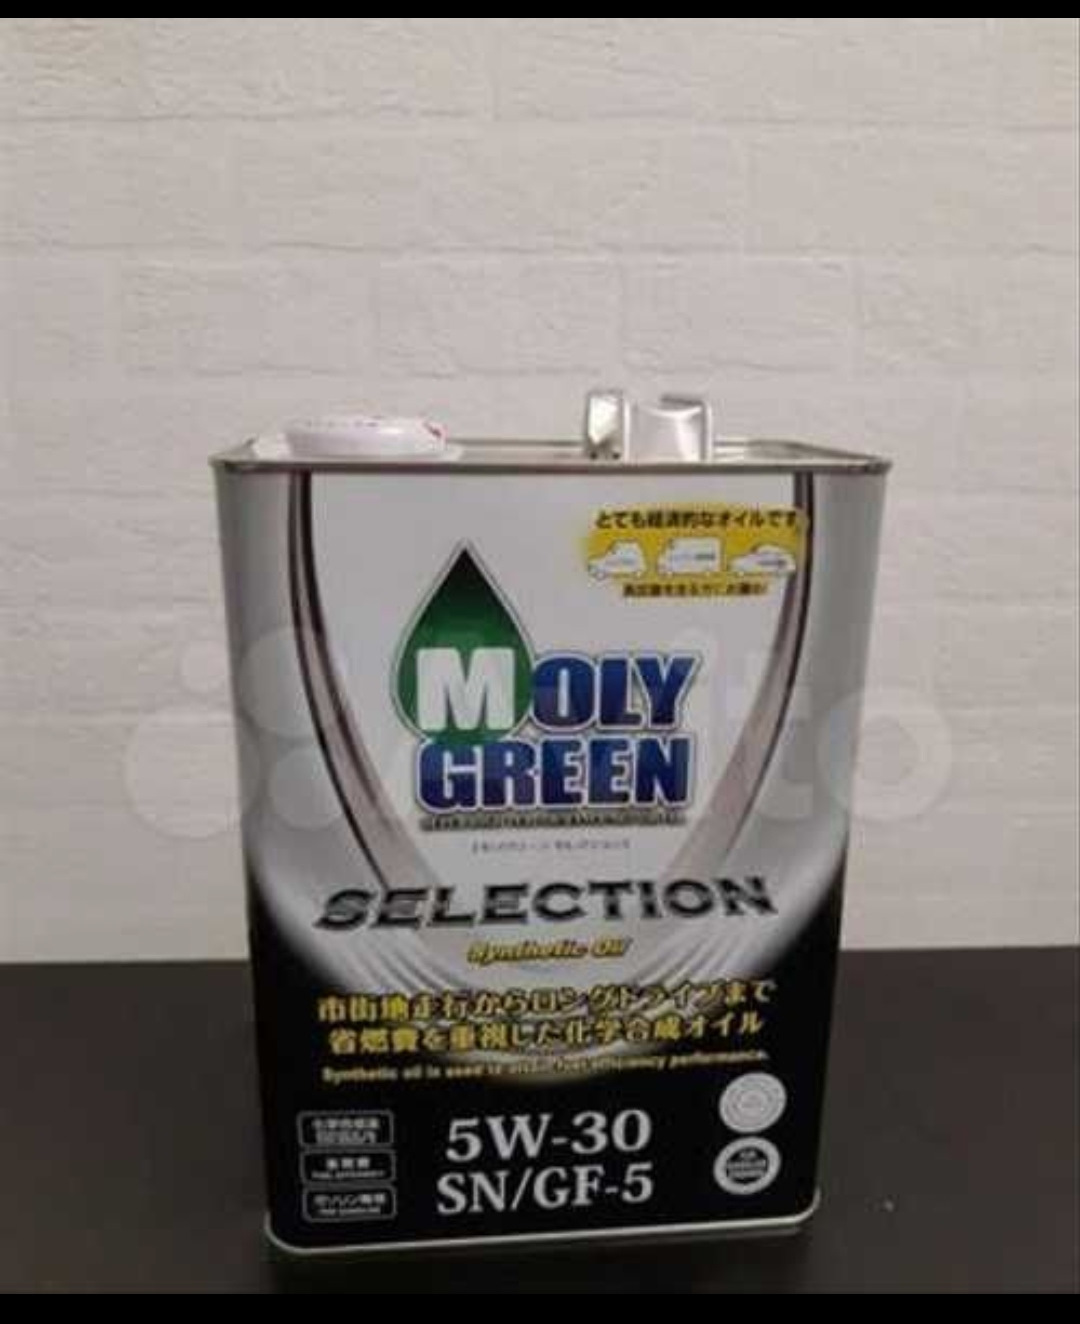 Моли грин 5w30 купить. Моторное масло Moly Green 5w30. Moly Green 5w30 selection. Moly Green 5w30 Premium Black. Moly Green Black SN/gf-5 5w-30 4л.